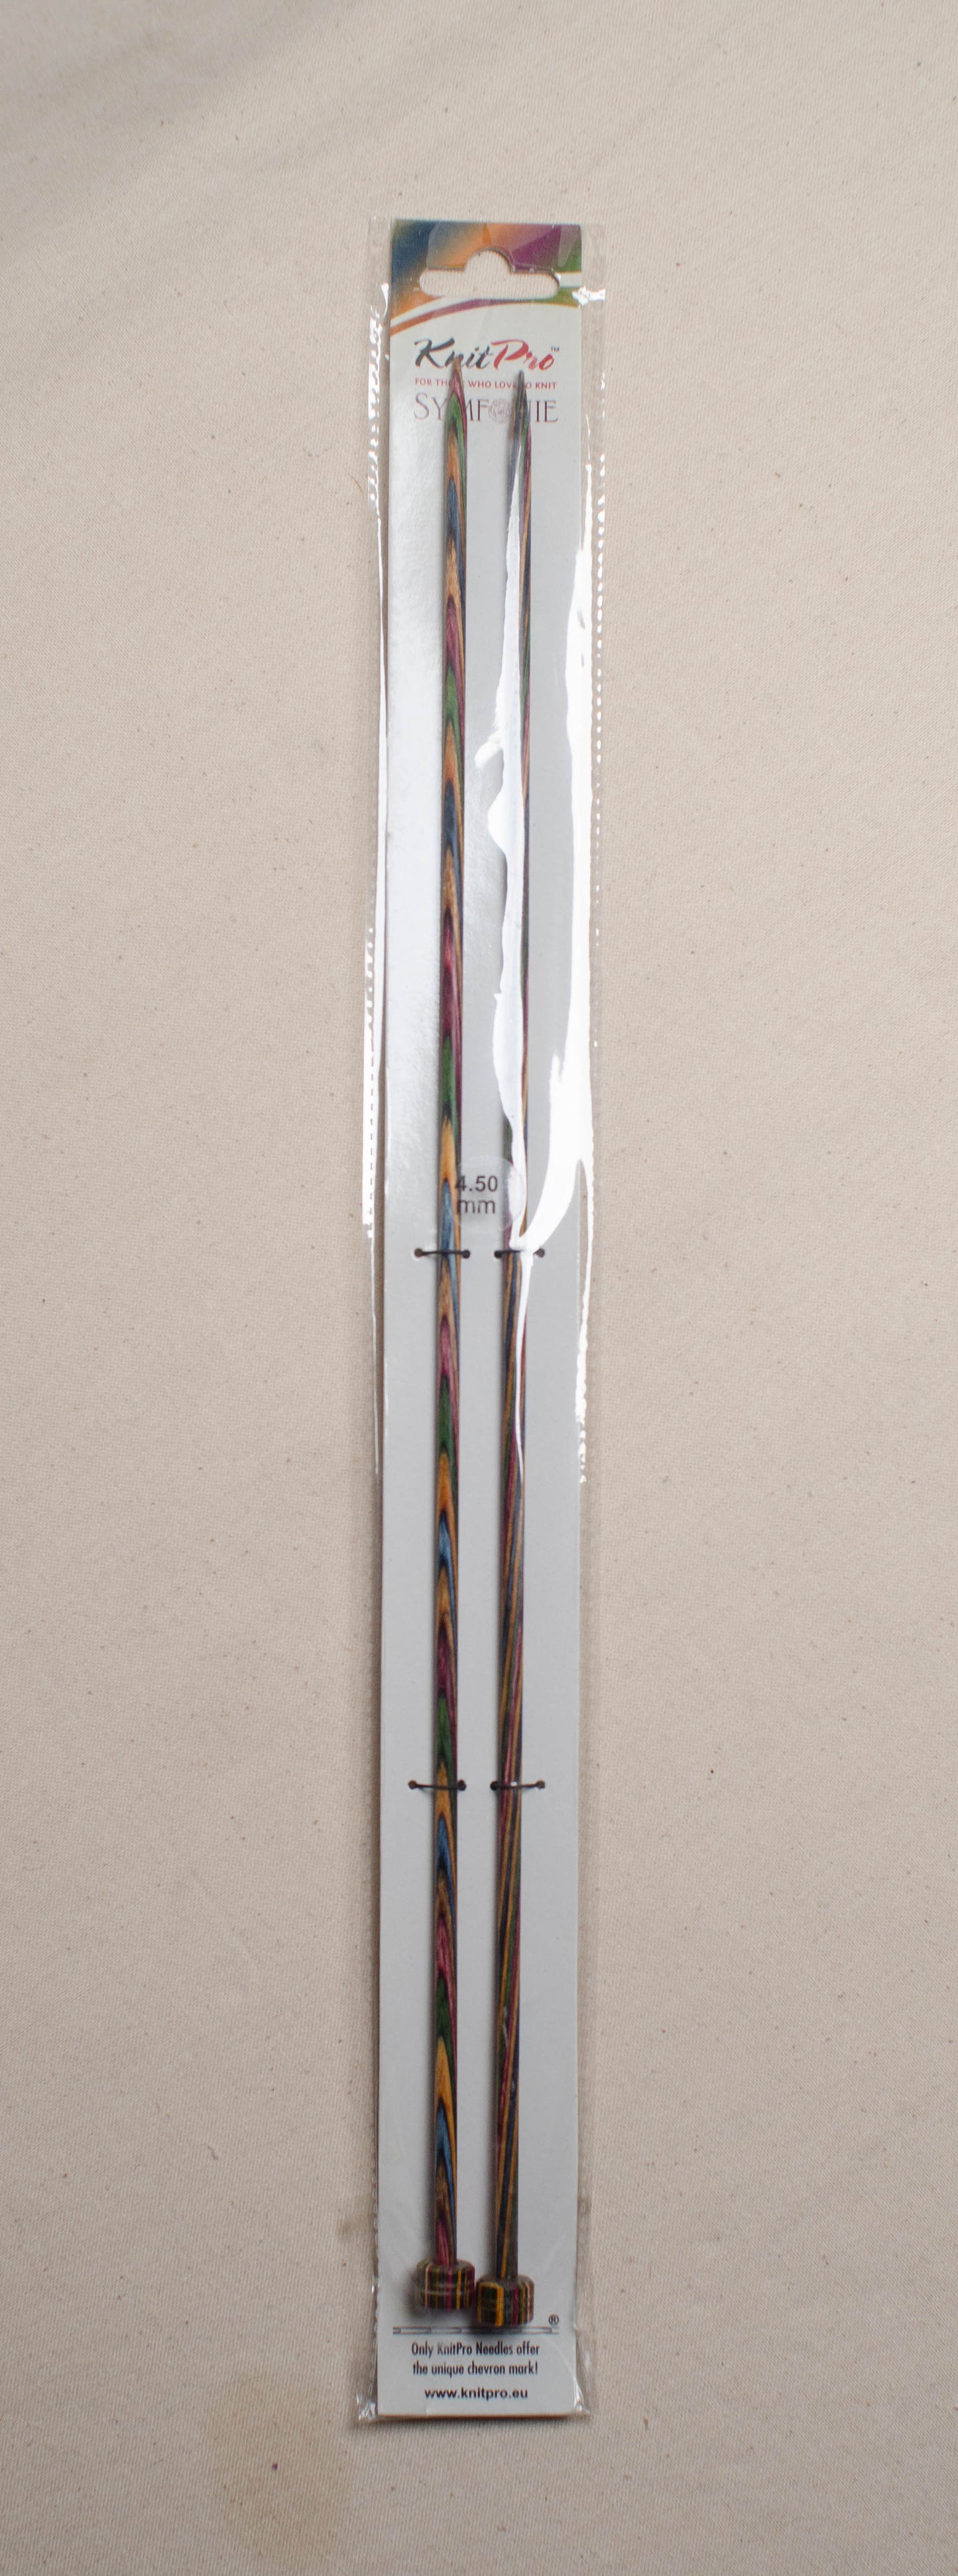 Knit Pro 40 cm x 4.50 mm Symfonie Single Pointed Needles, Multi-Color